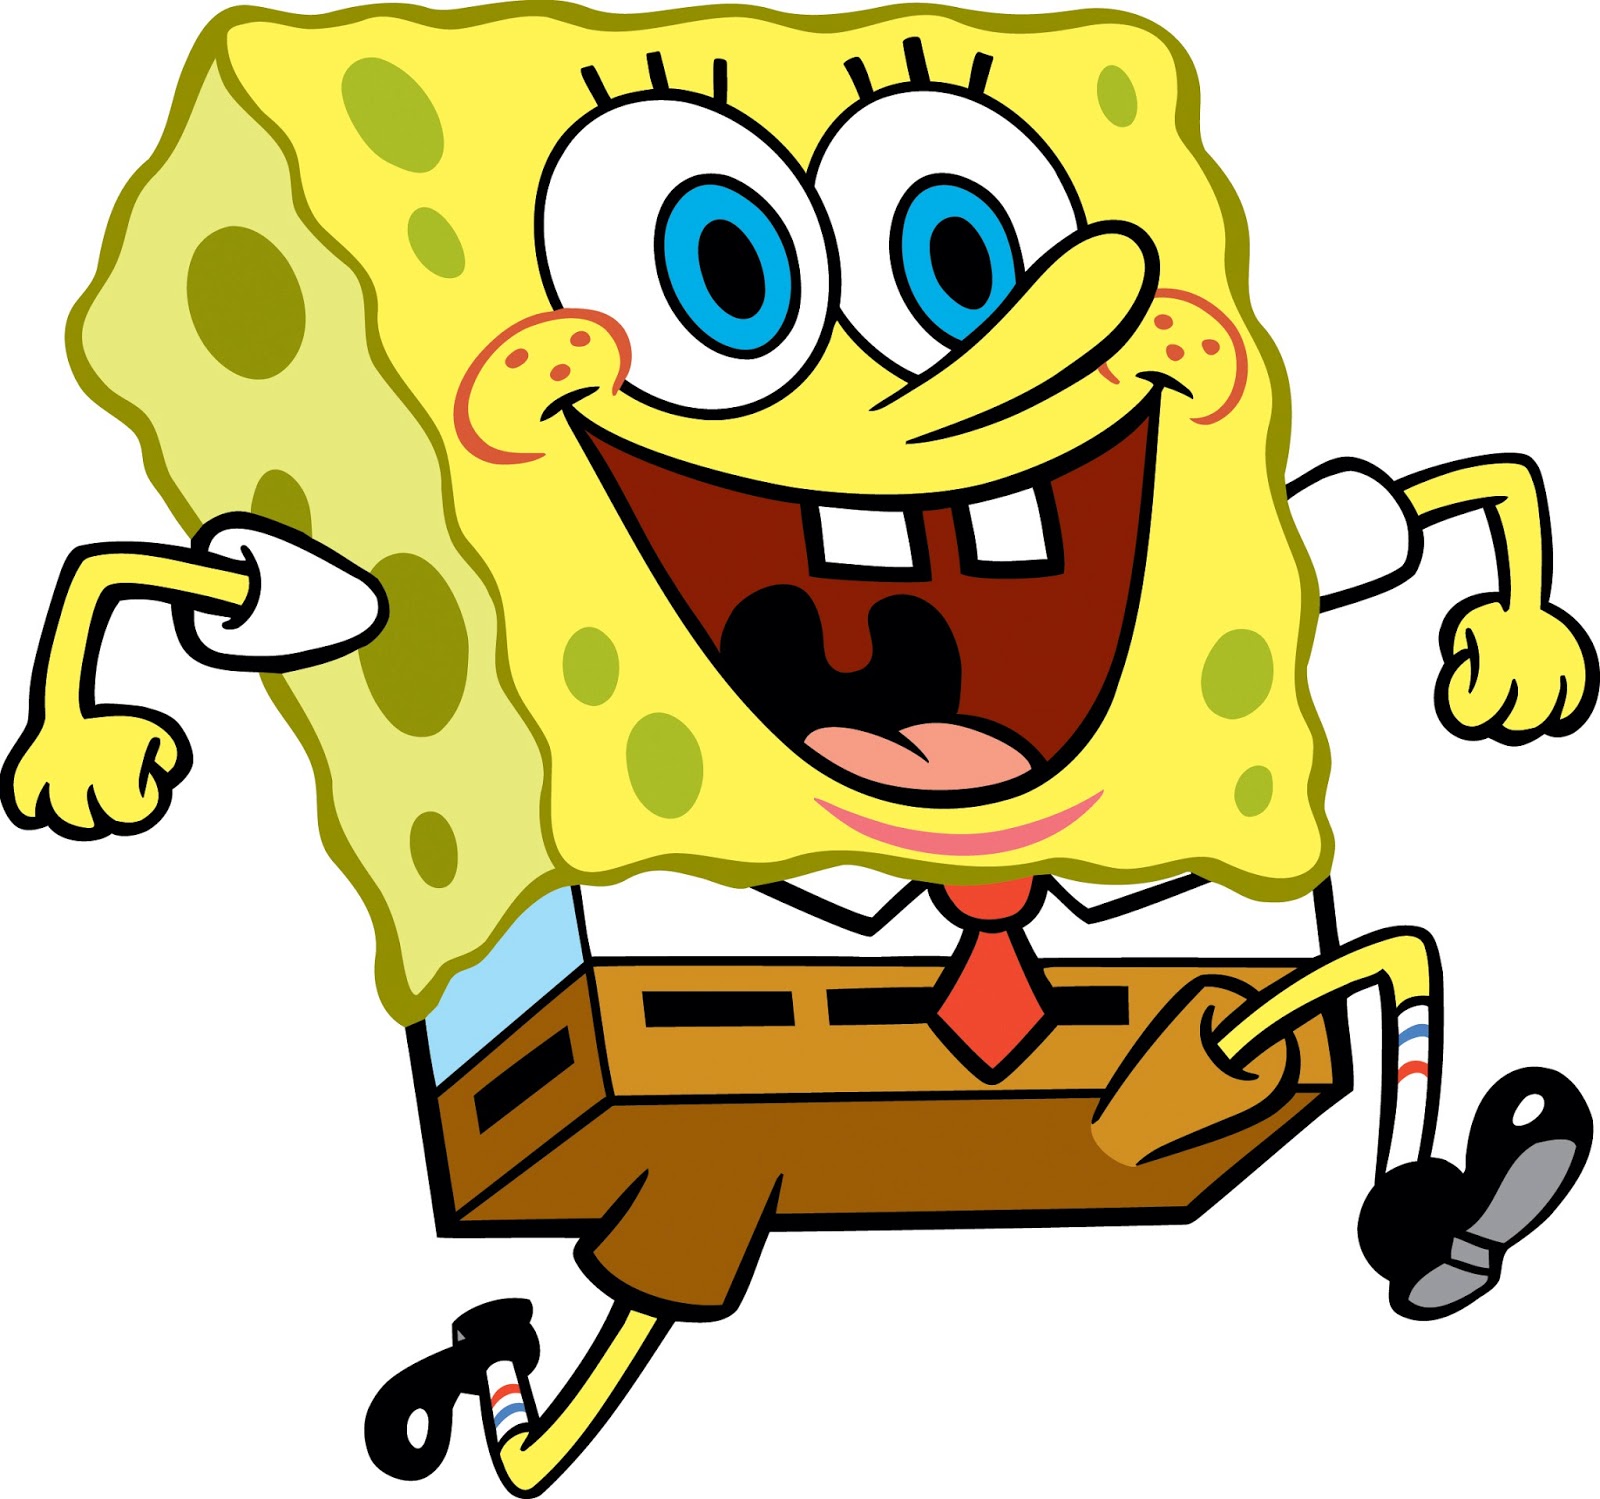 Kumpulan Gambar Lucu Kartun Spongebob Squarepants Gambar Gokil